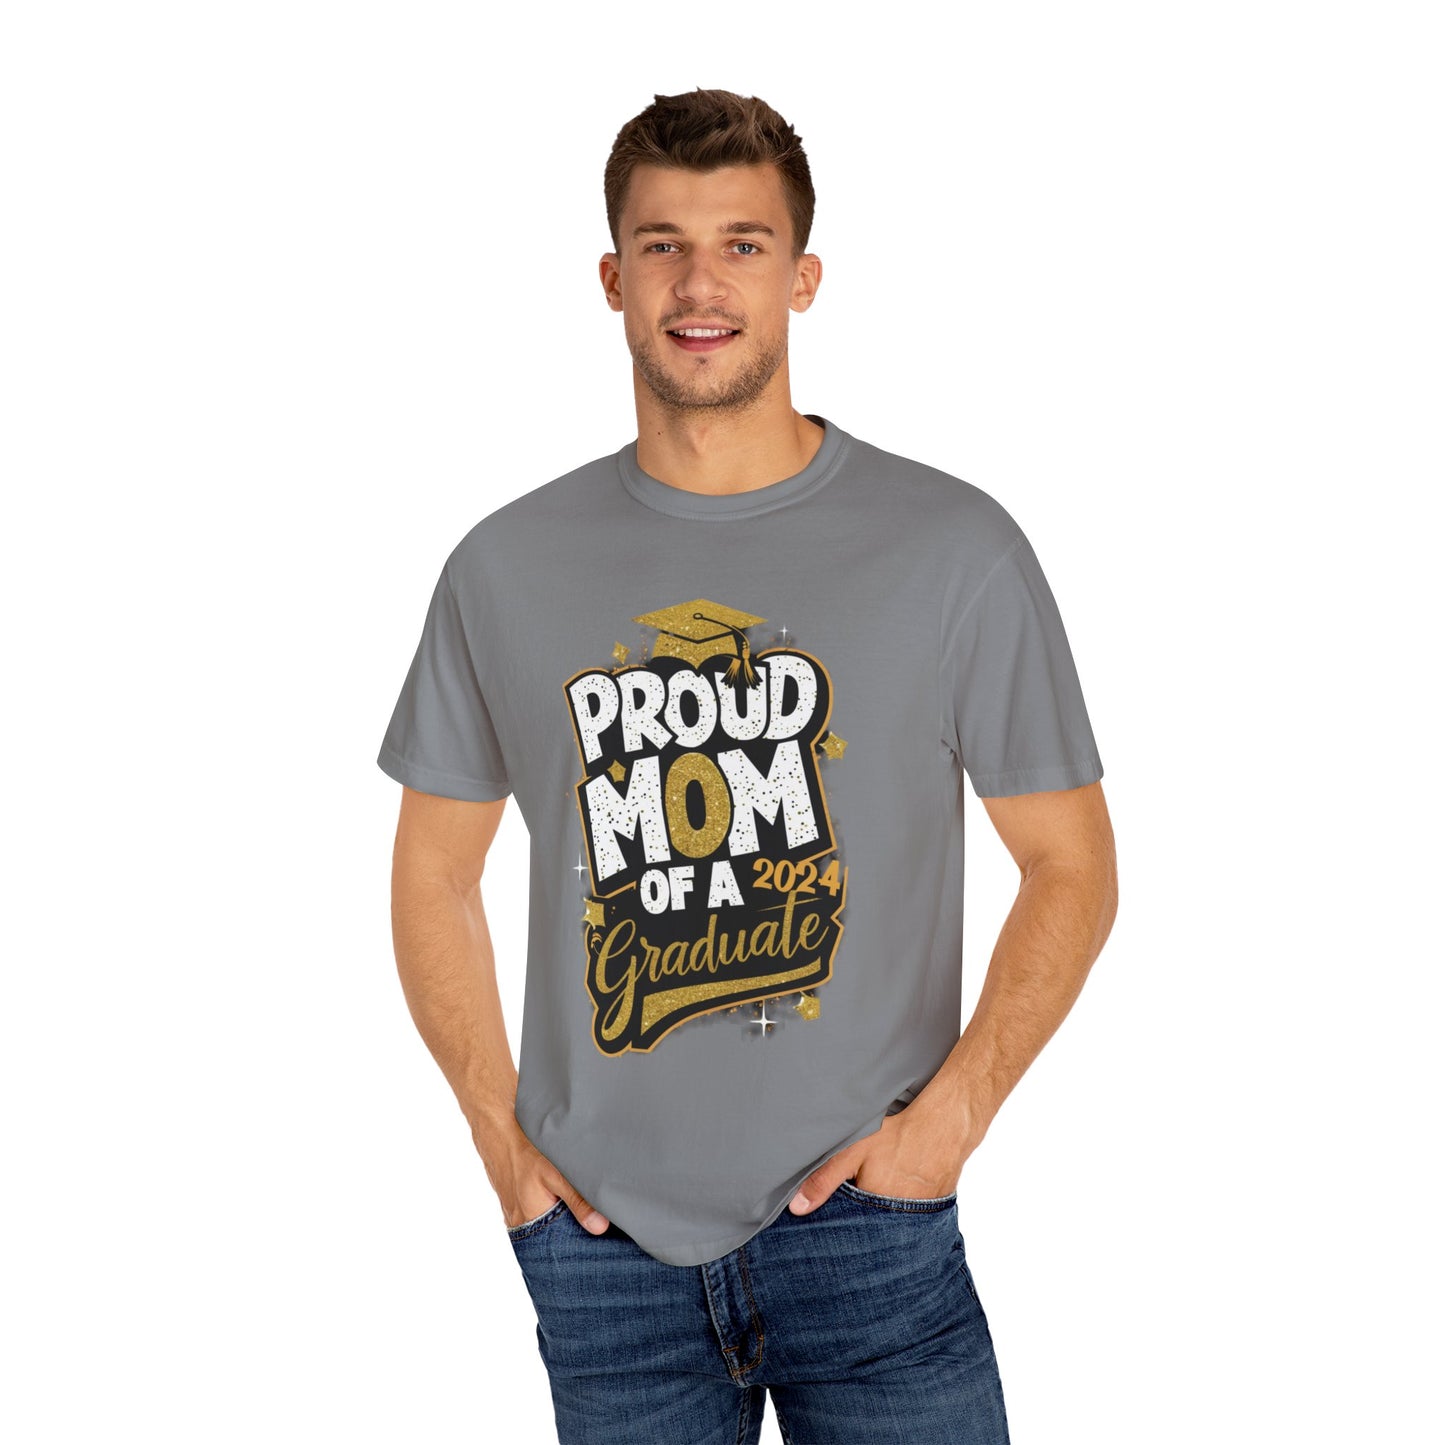 Proud Mom of a 2024 Graduate Unisex Garment-dyed T-shirt Cotton Funny Humorous Graphic Soft Premium Unisex Men Women Grey T-shirt Birthday Gift-42